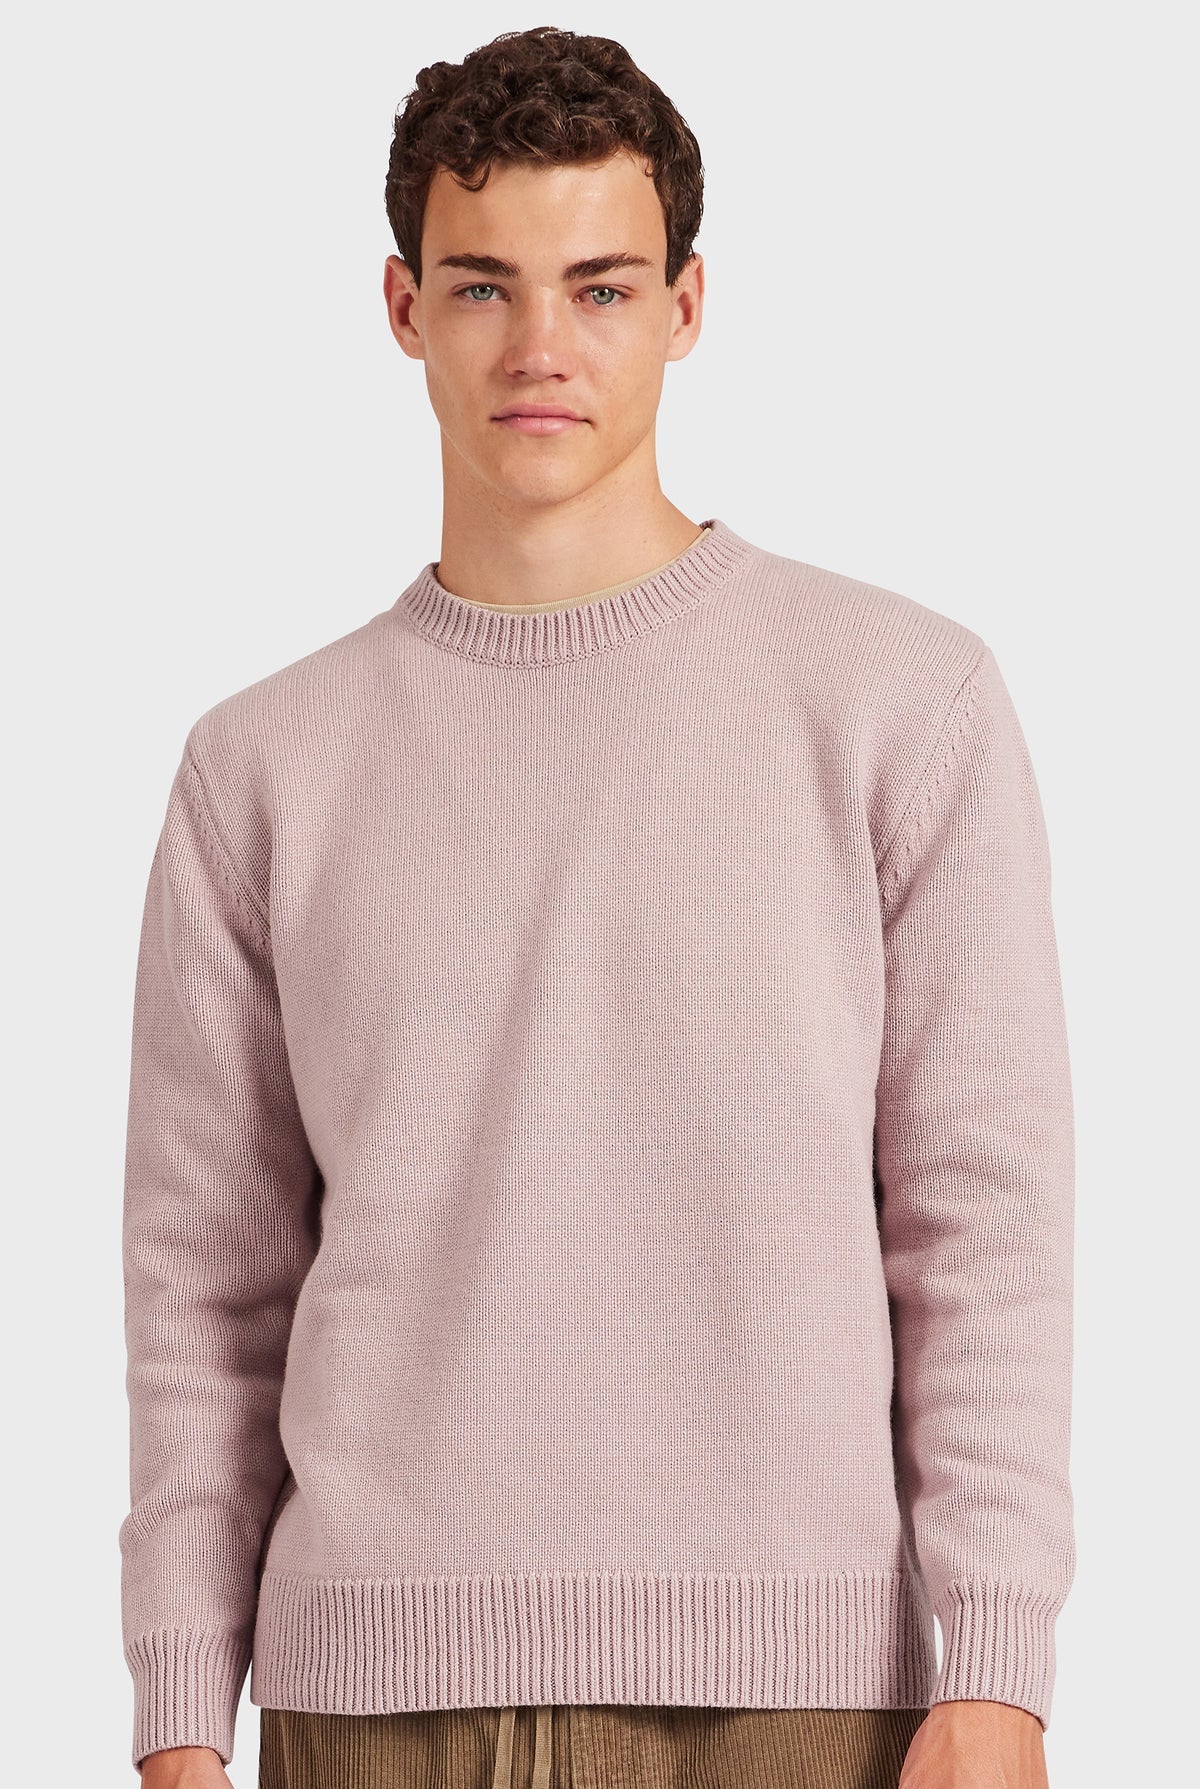 Malibu Crew Men's Sweater in Chalk Pink